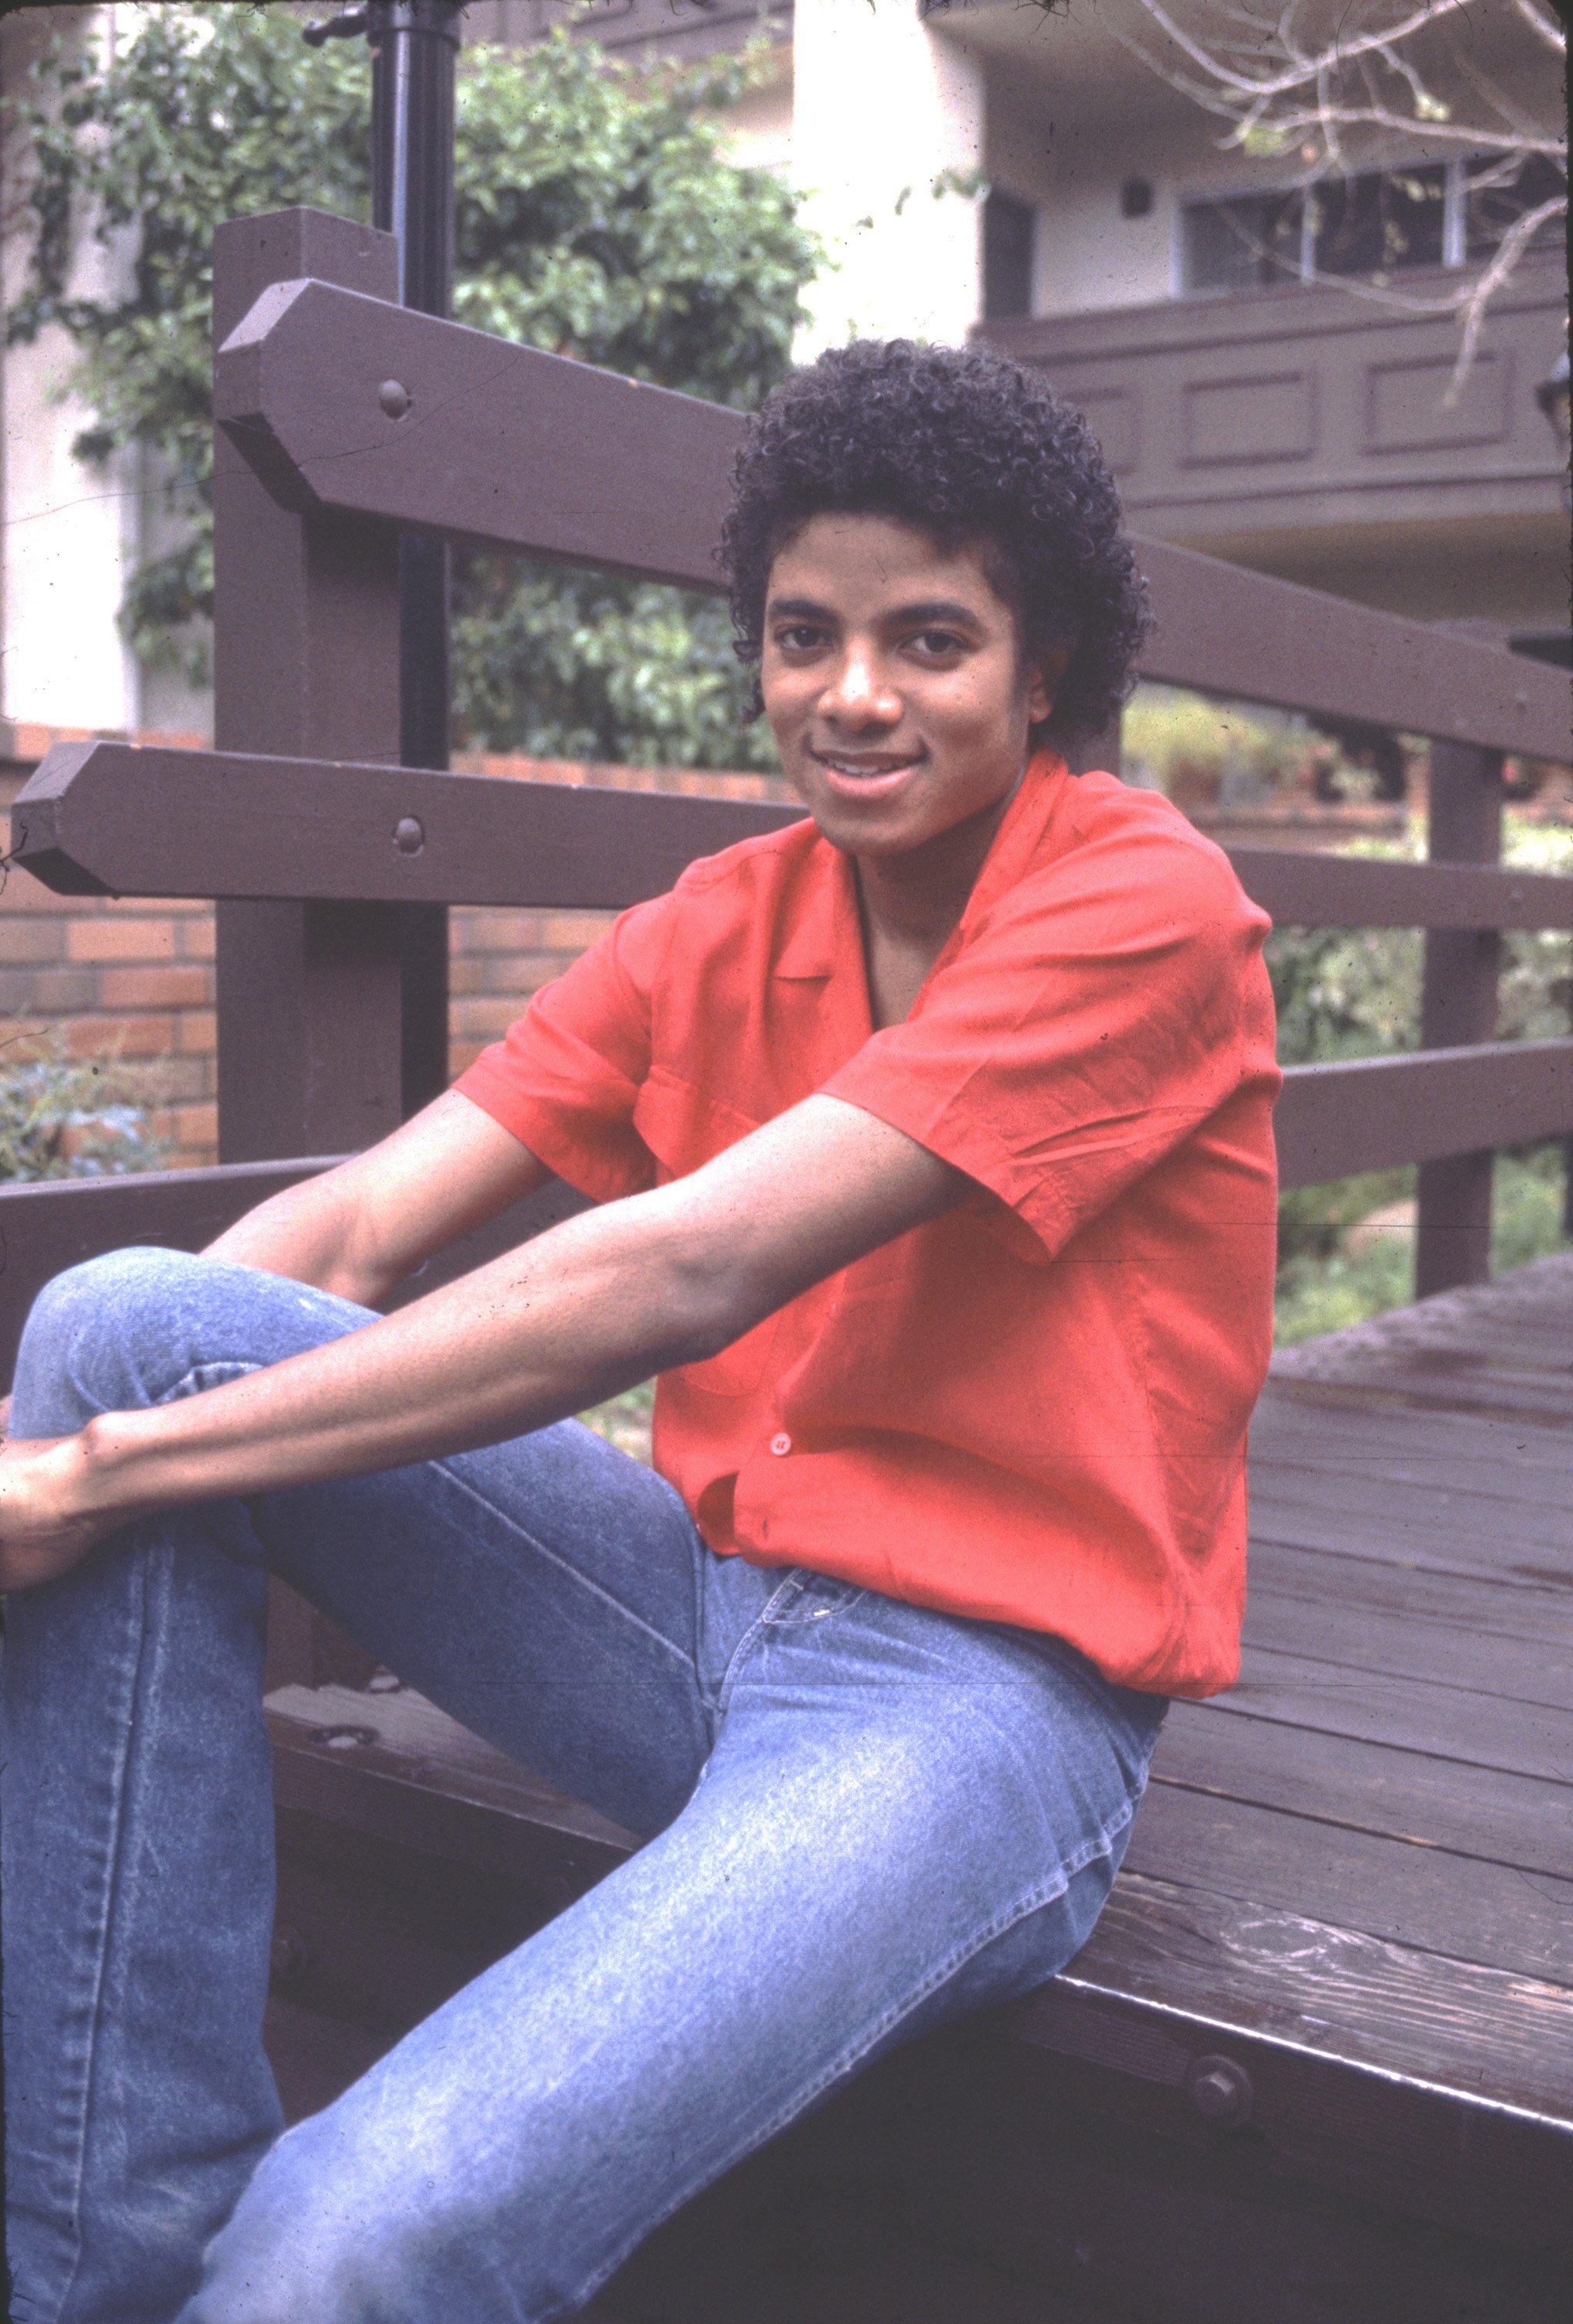 Michael Jackson in 1979